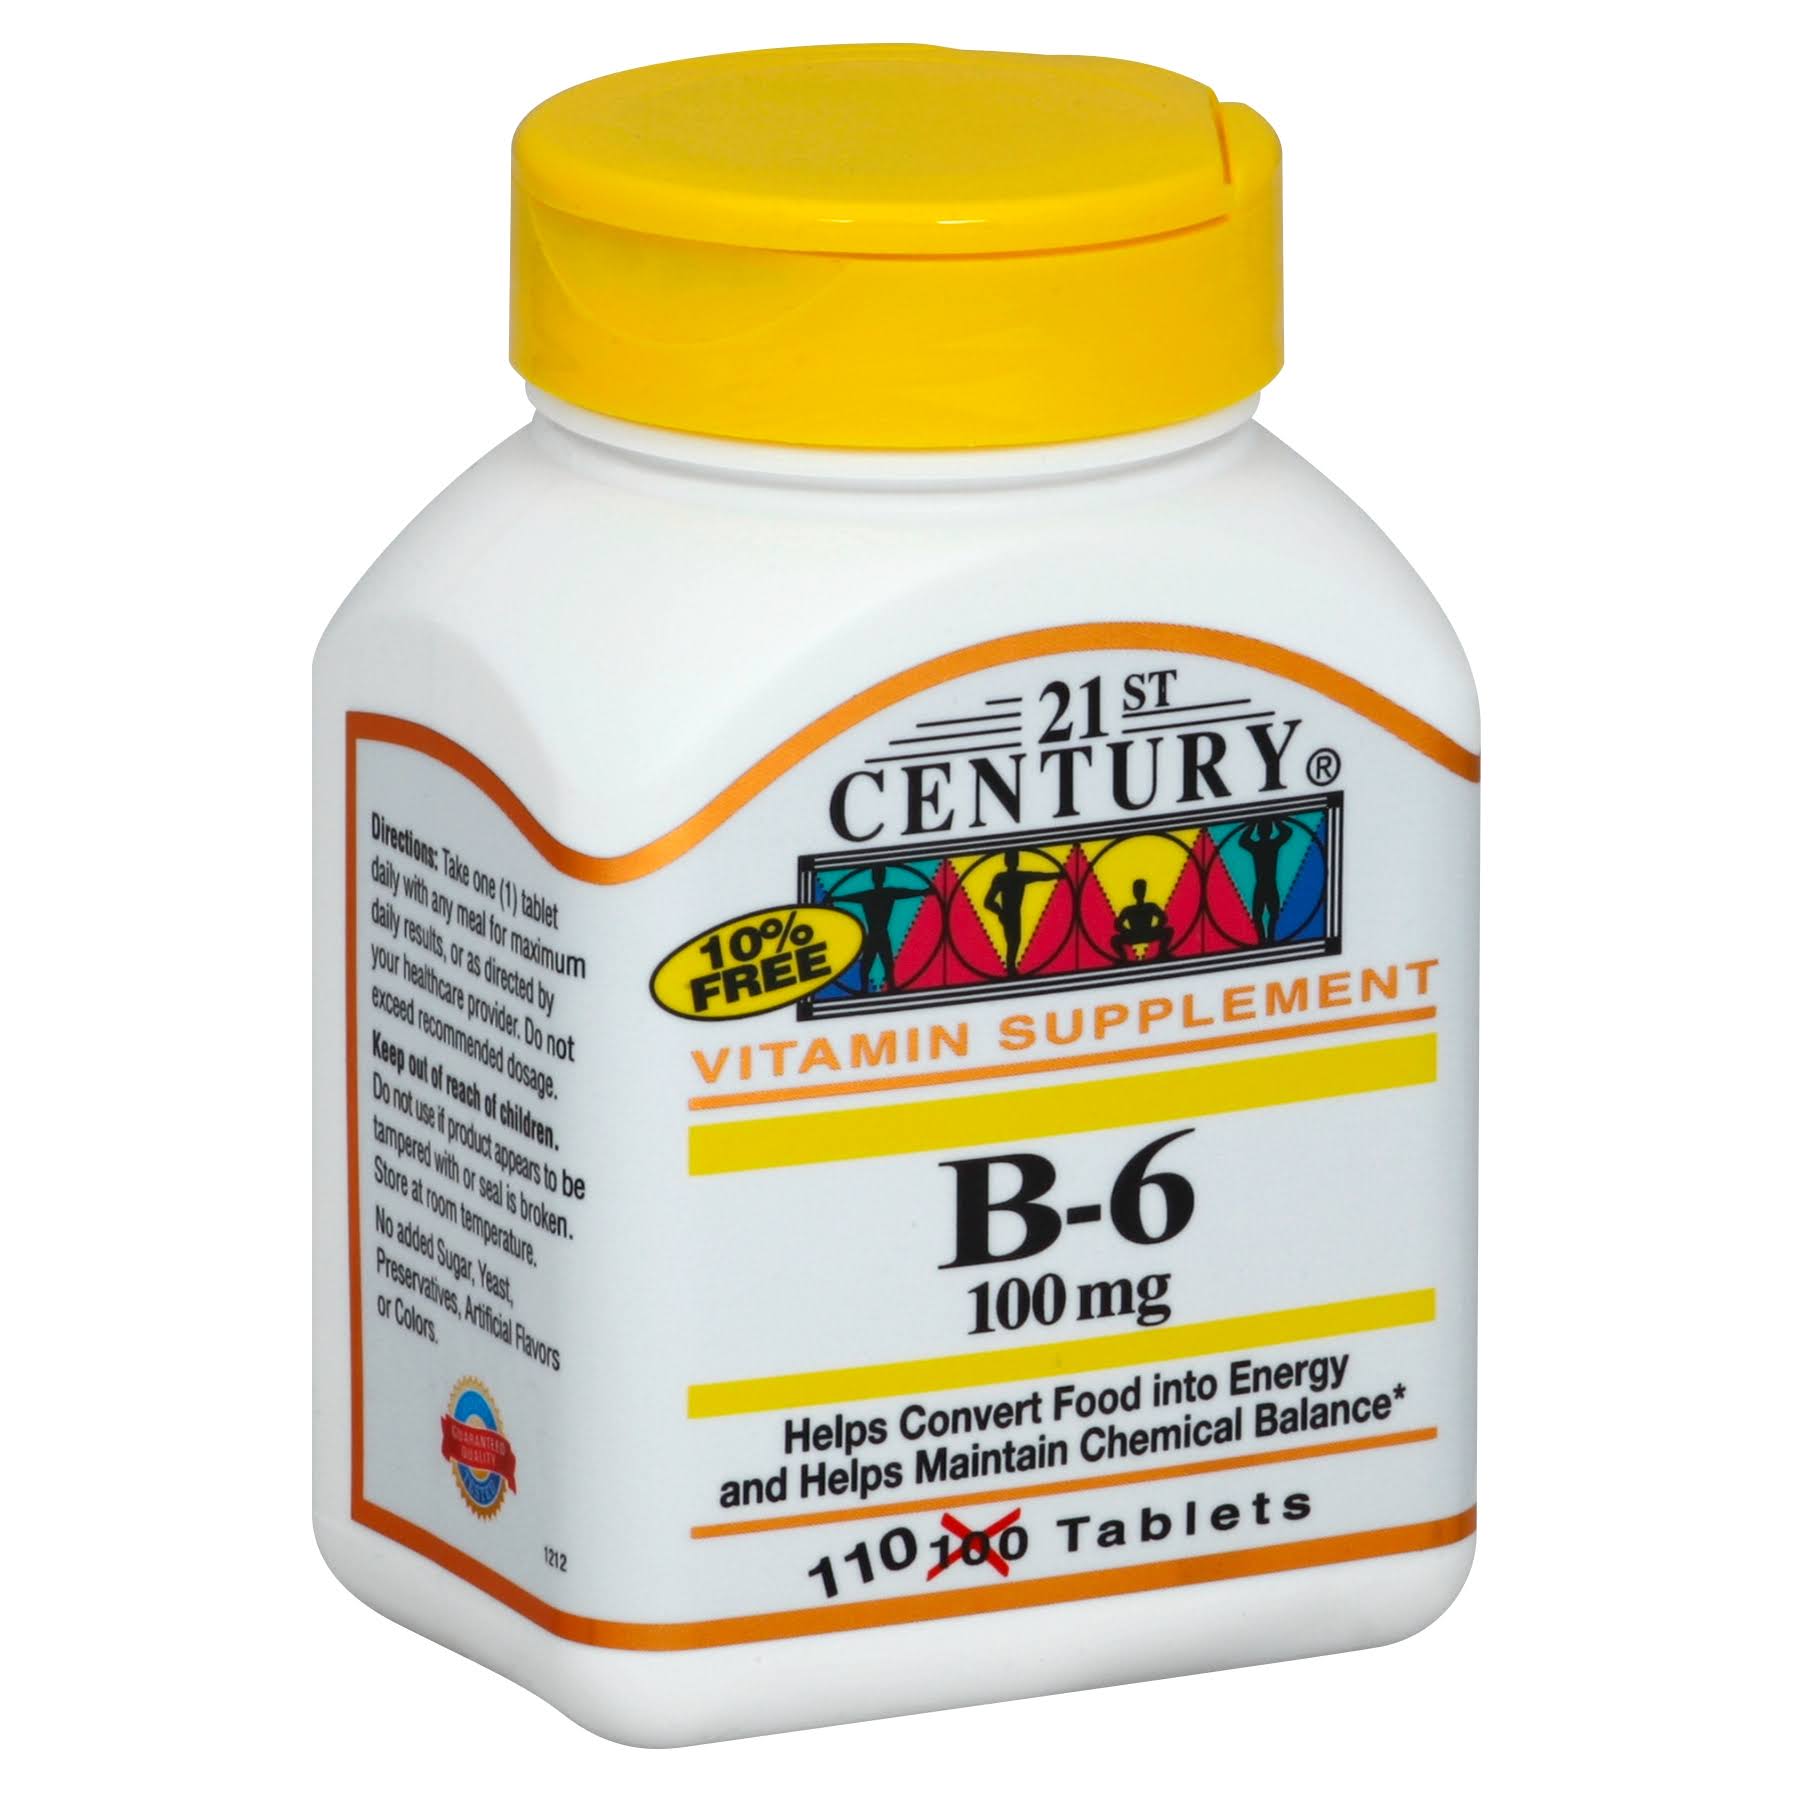 21st Century B-6 Supplement - 100mg, 110ct